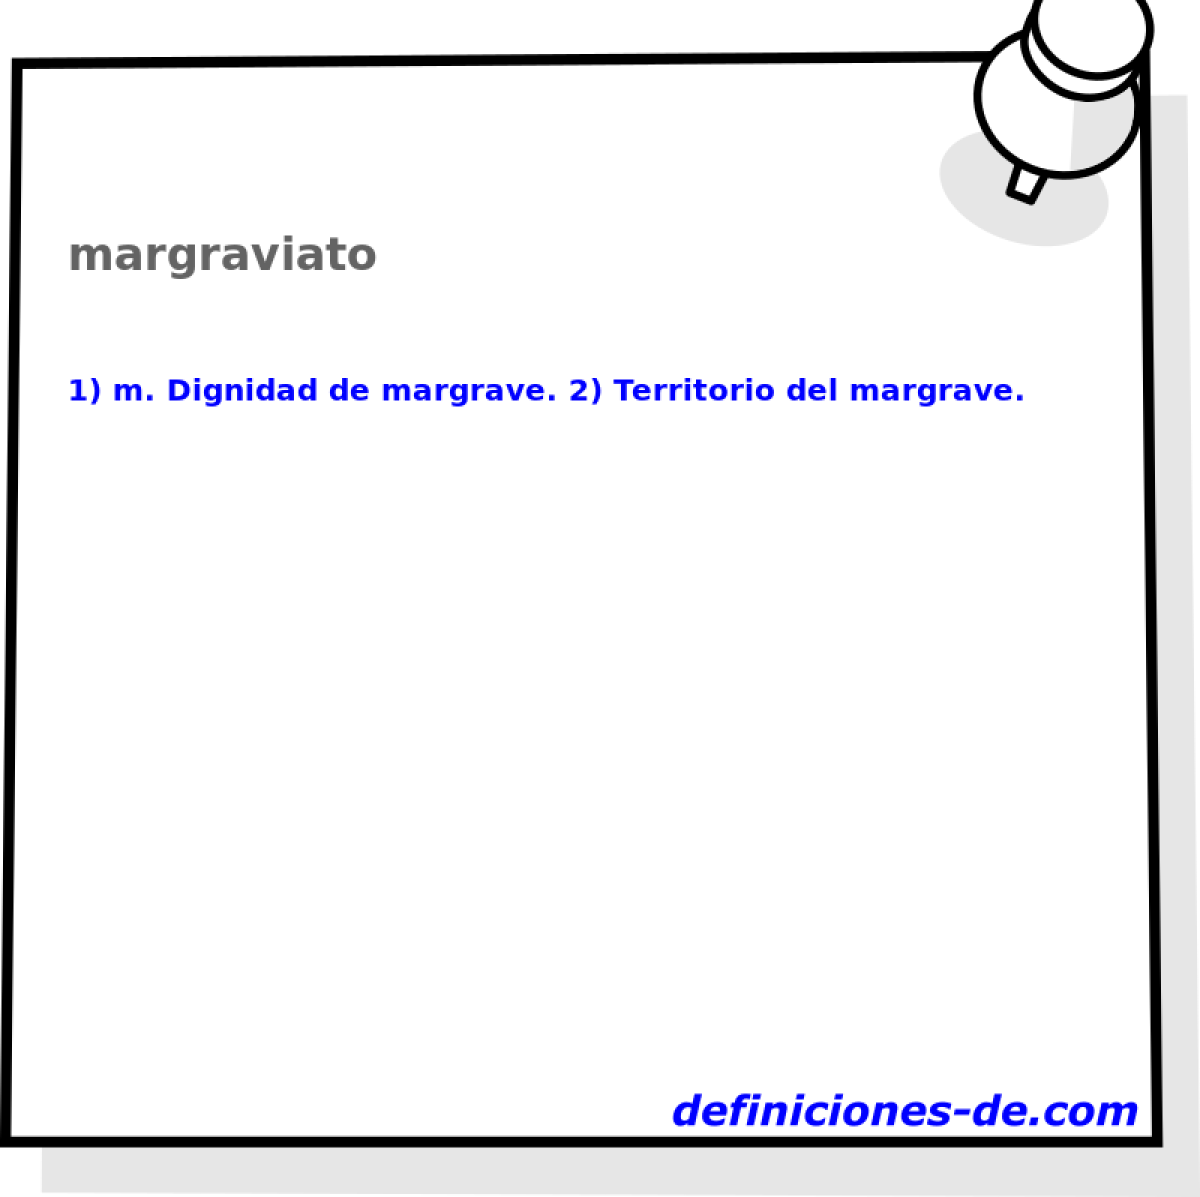 margraviato 